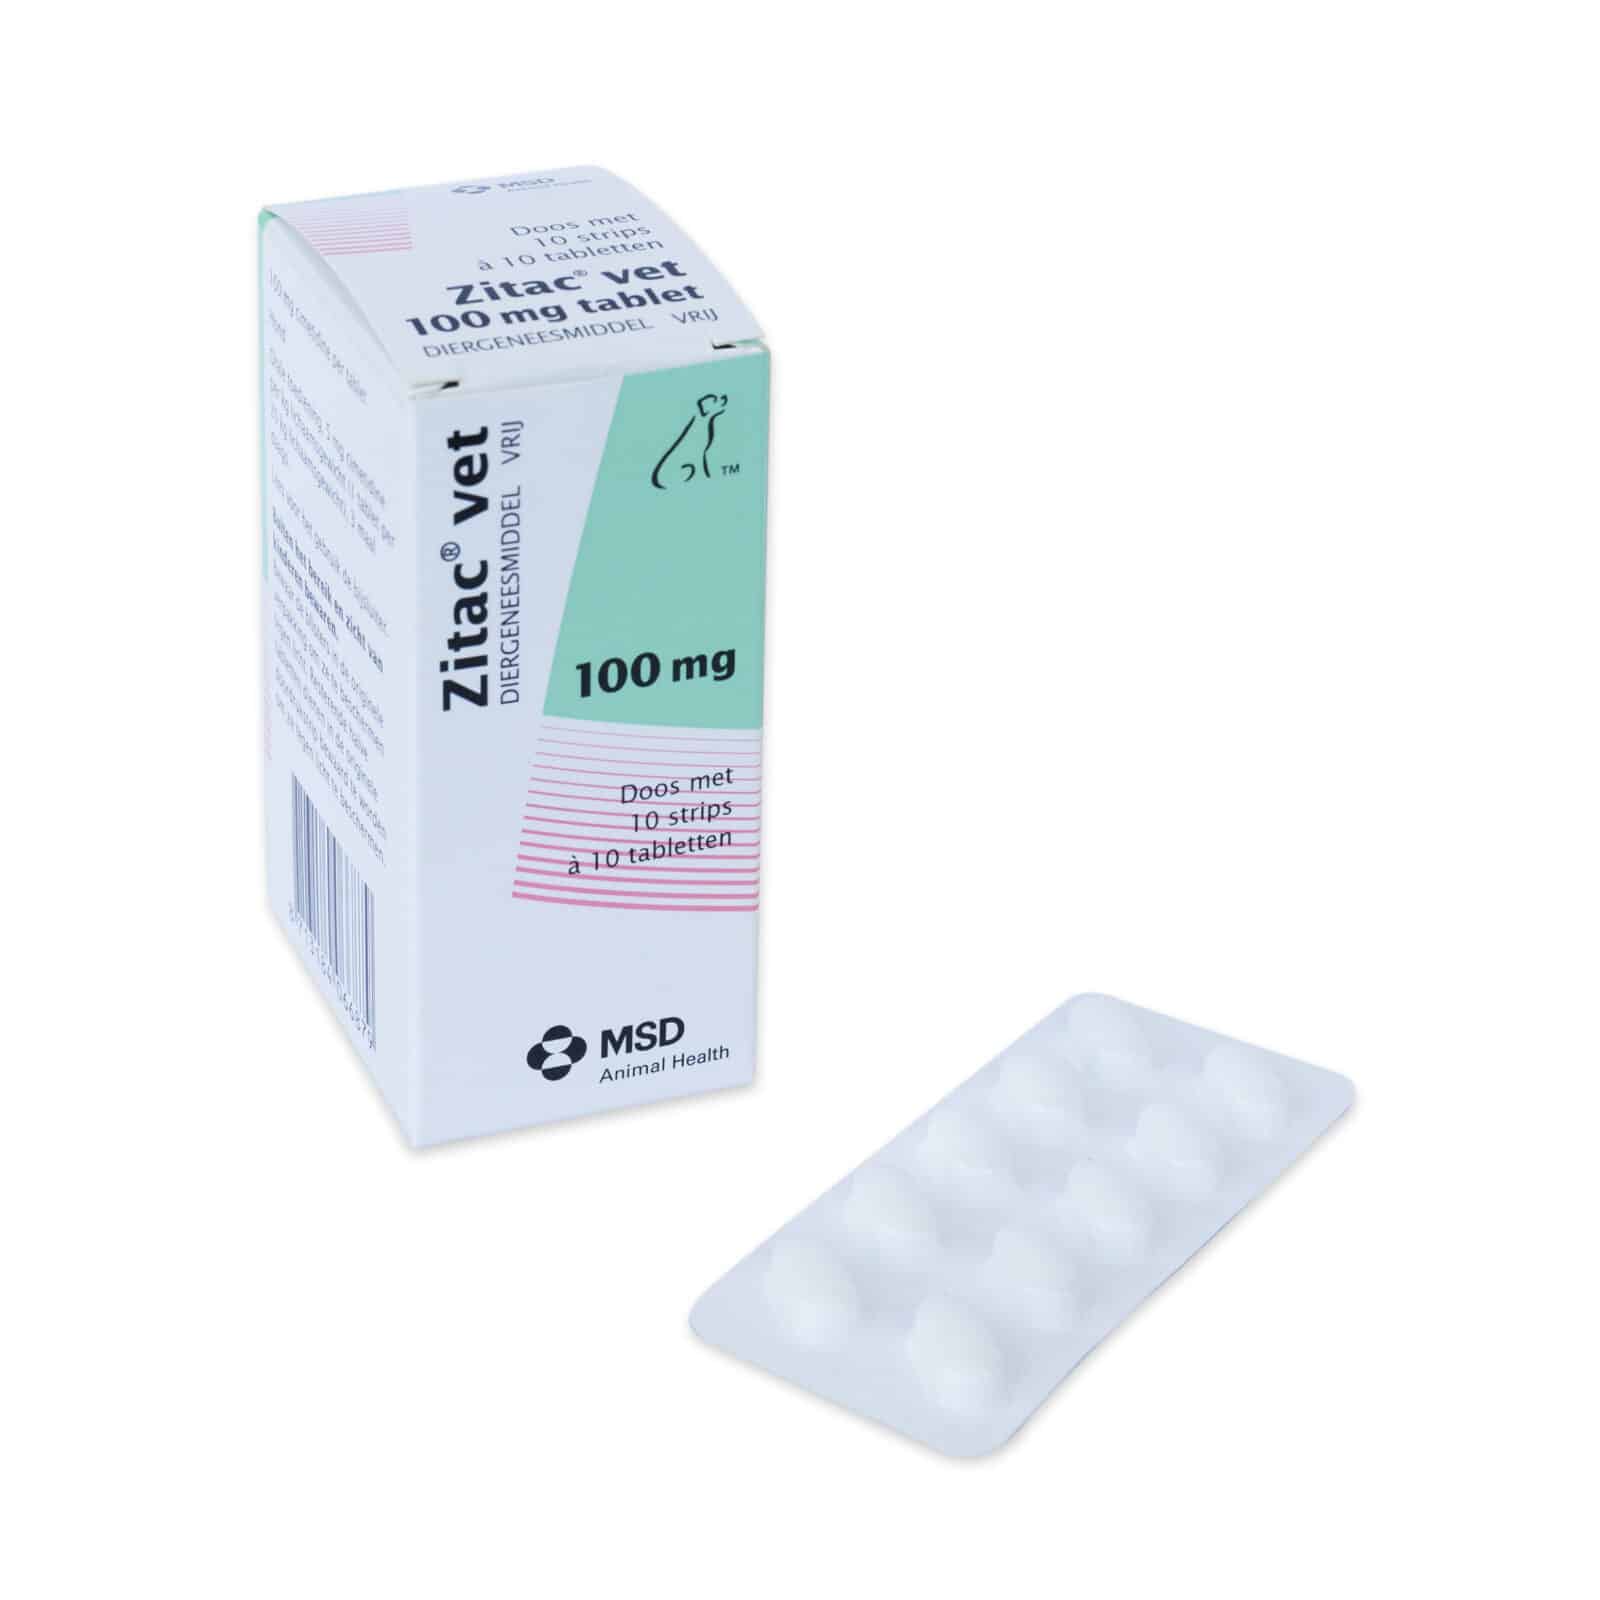 Zitac Vet 100 mg-3